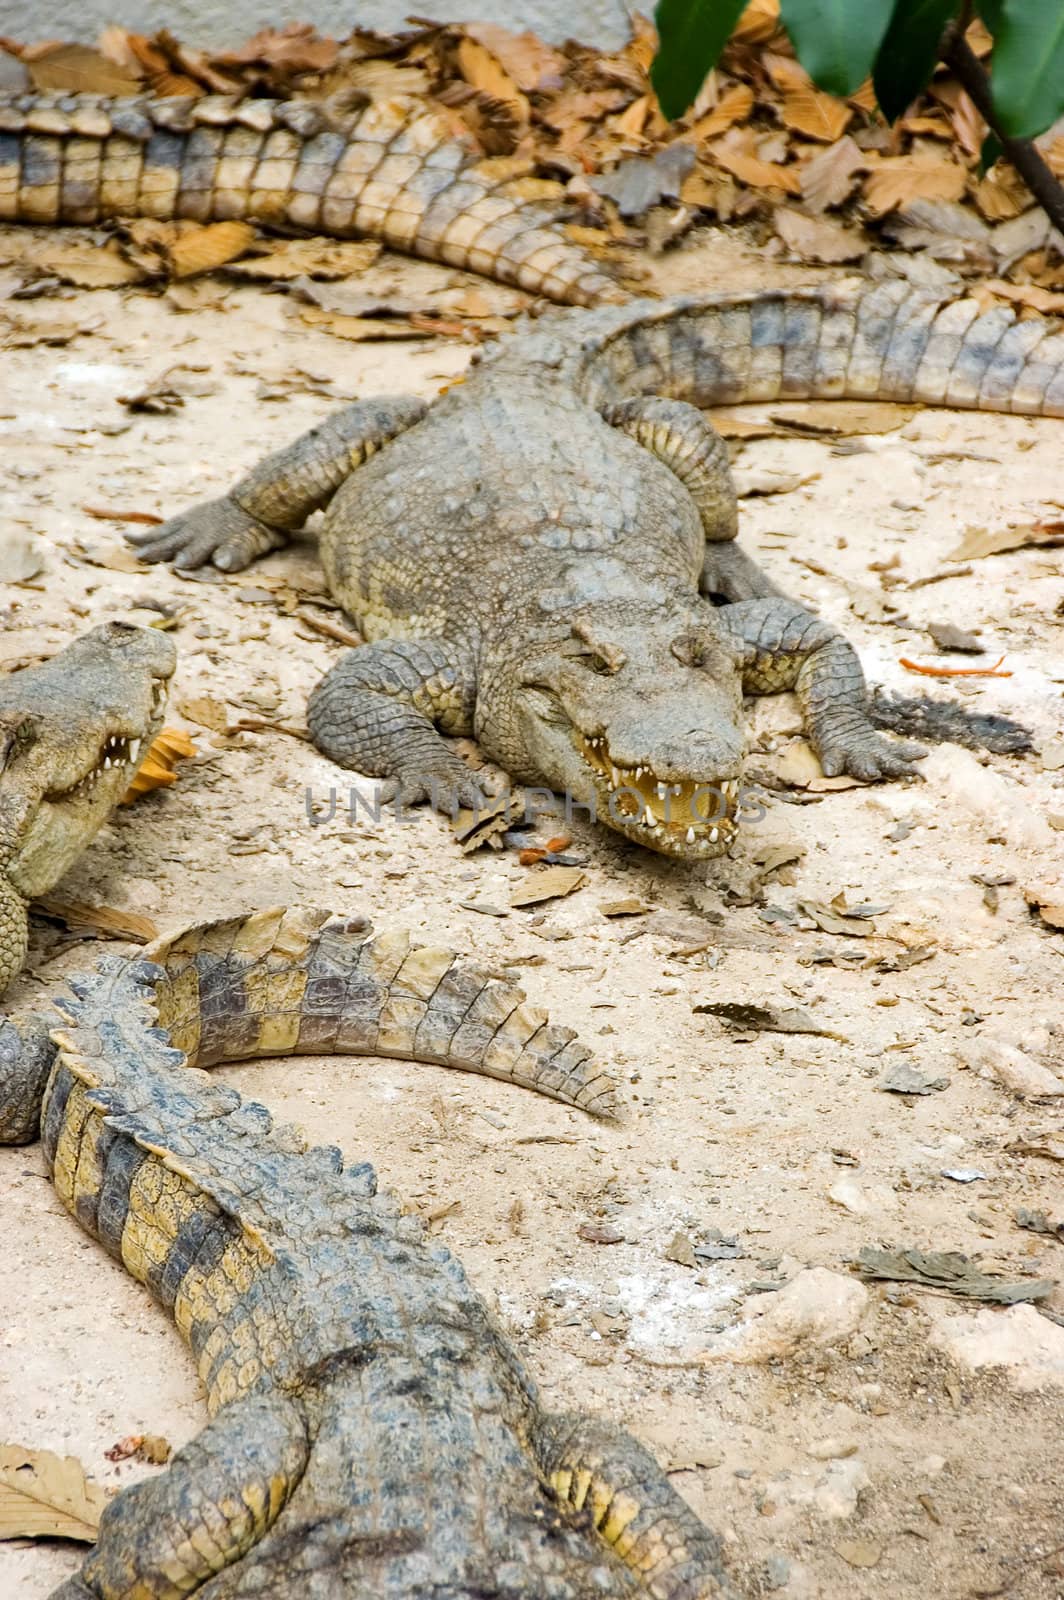 group of crocodiles